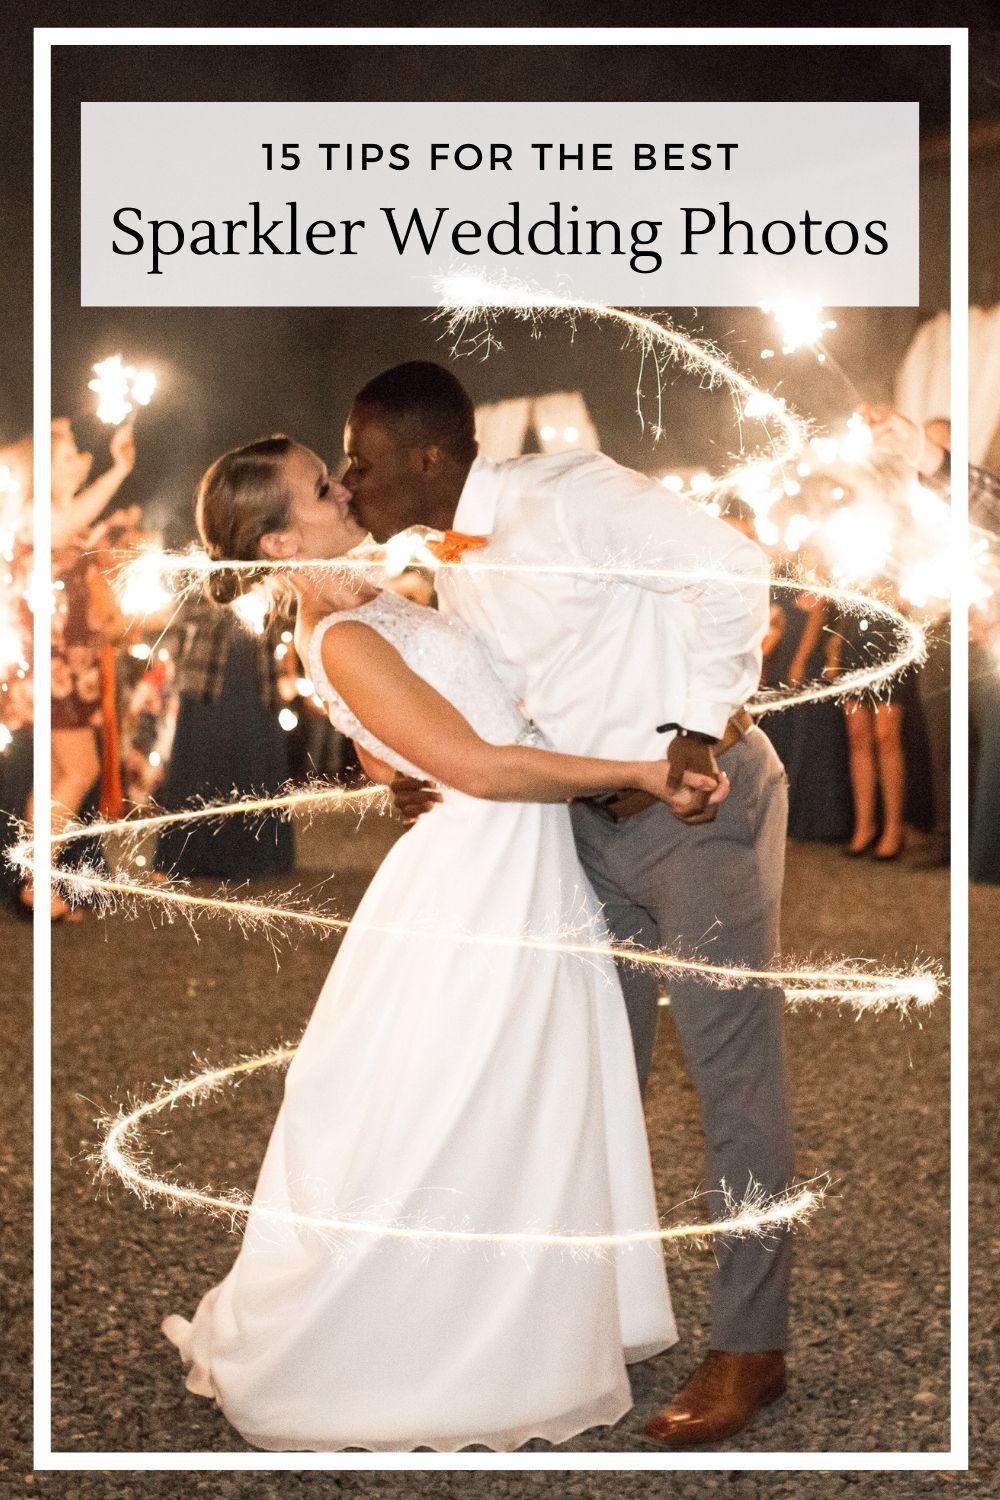 Tips for best sparkler wedding photos